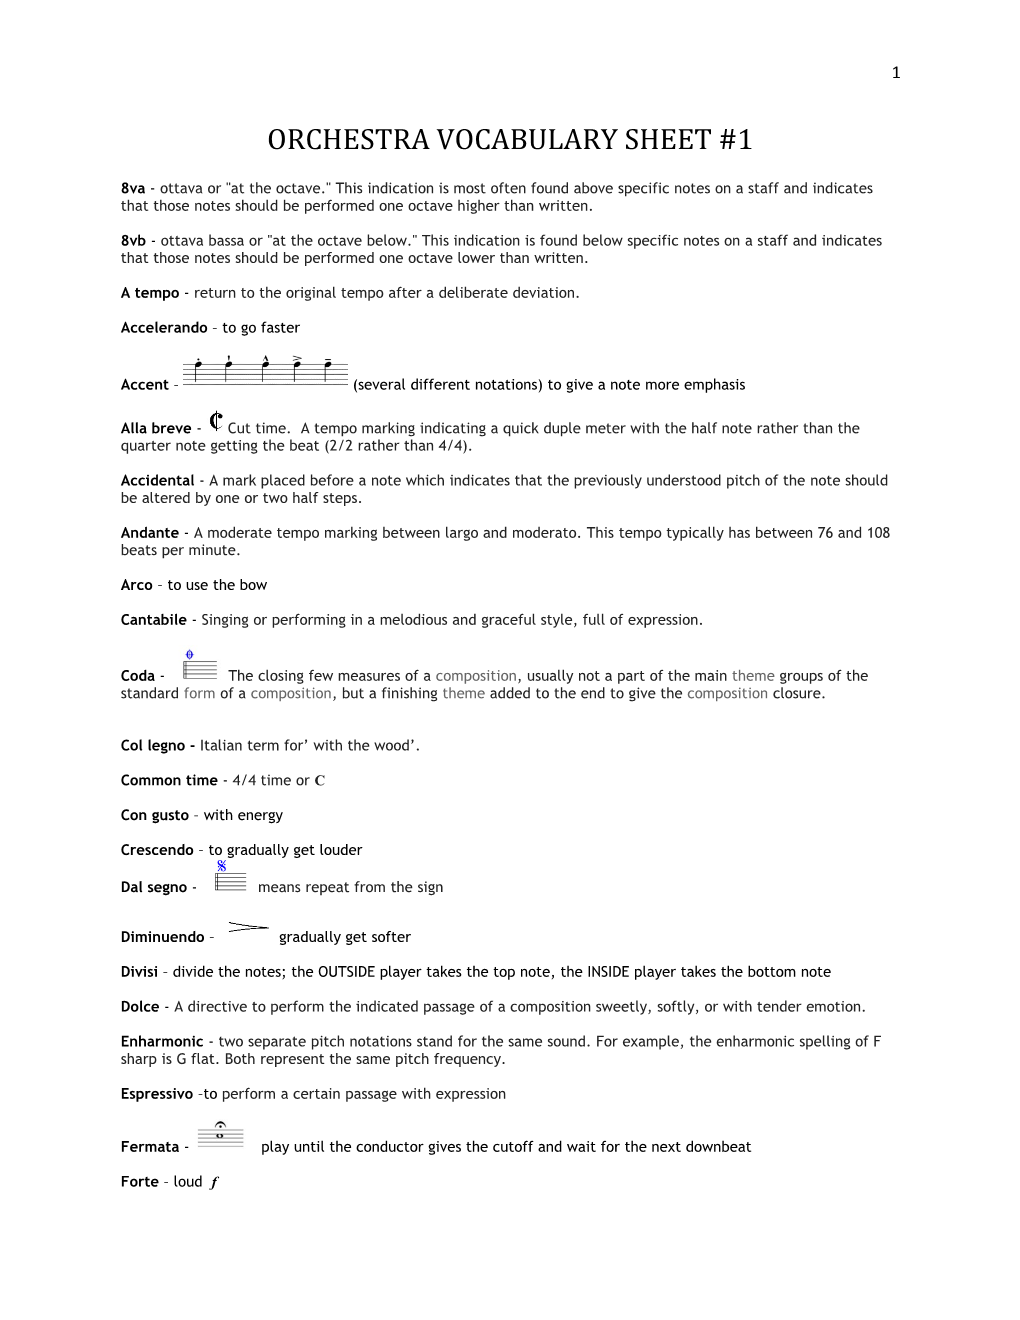 Orchestra Vocabulary Sheet #1